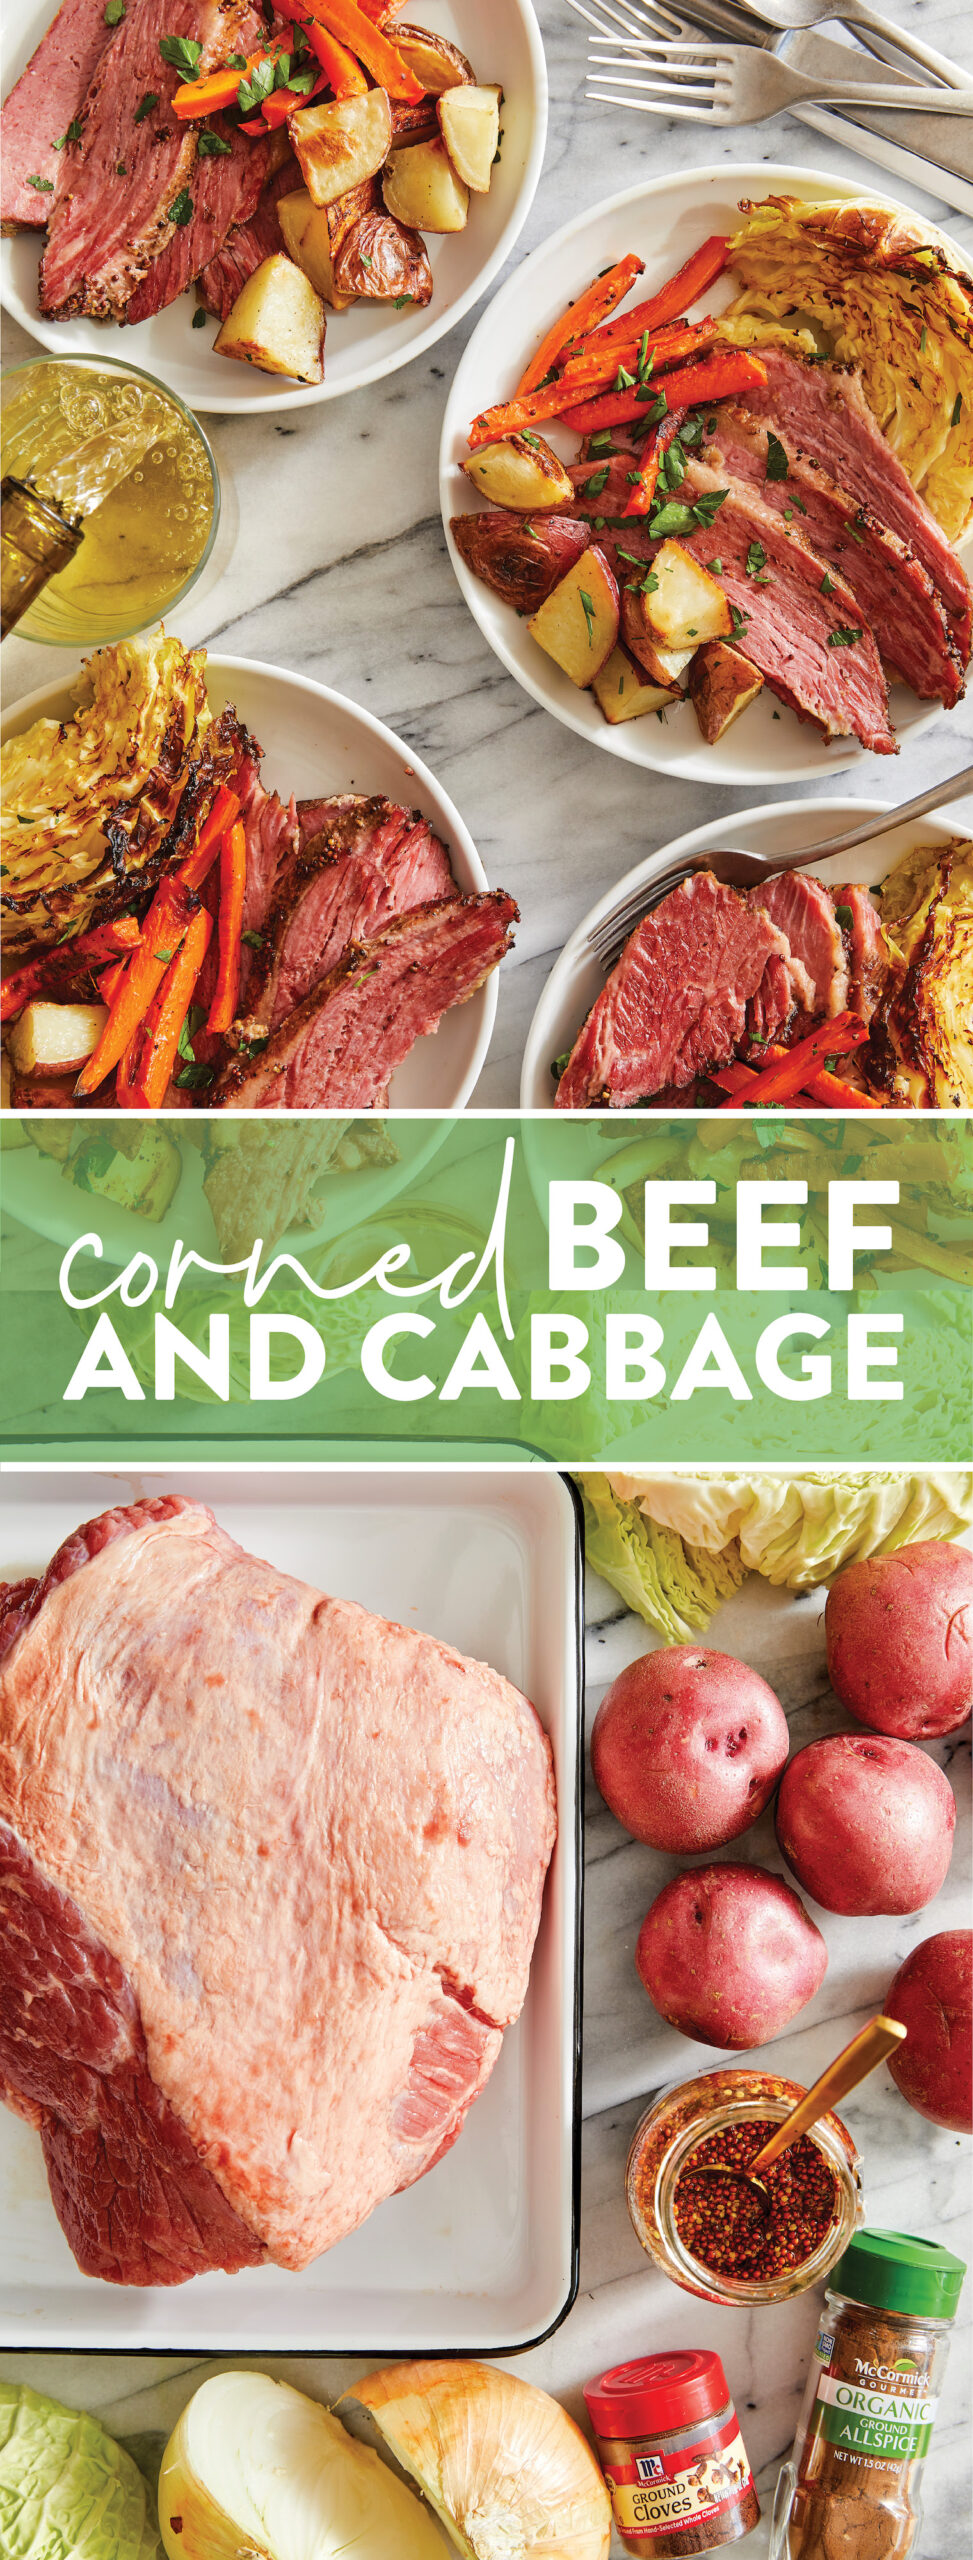 Corned Beef and Cabbage | LaptrinhX / News